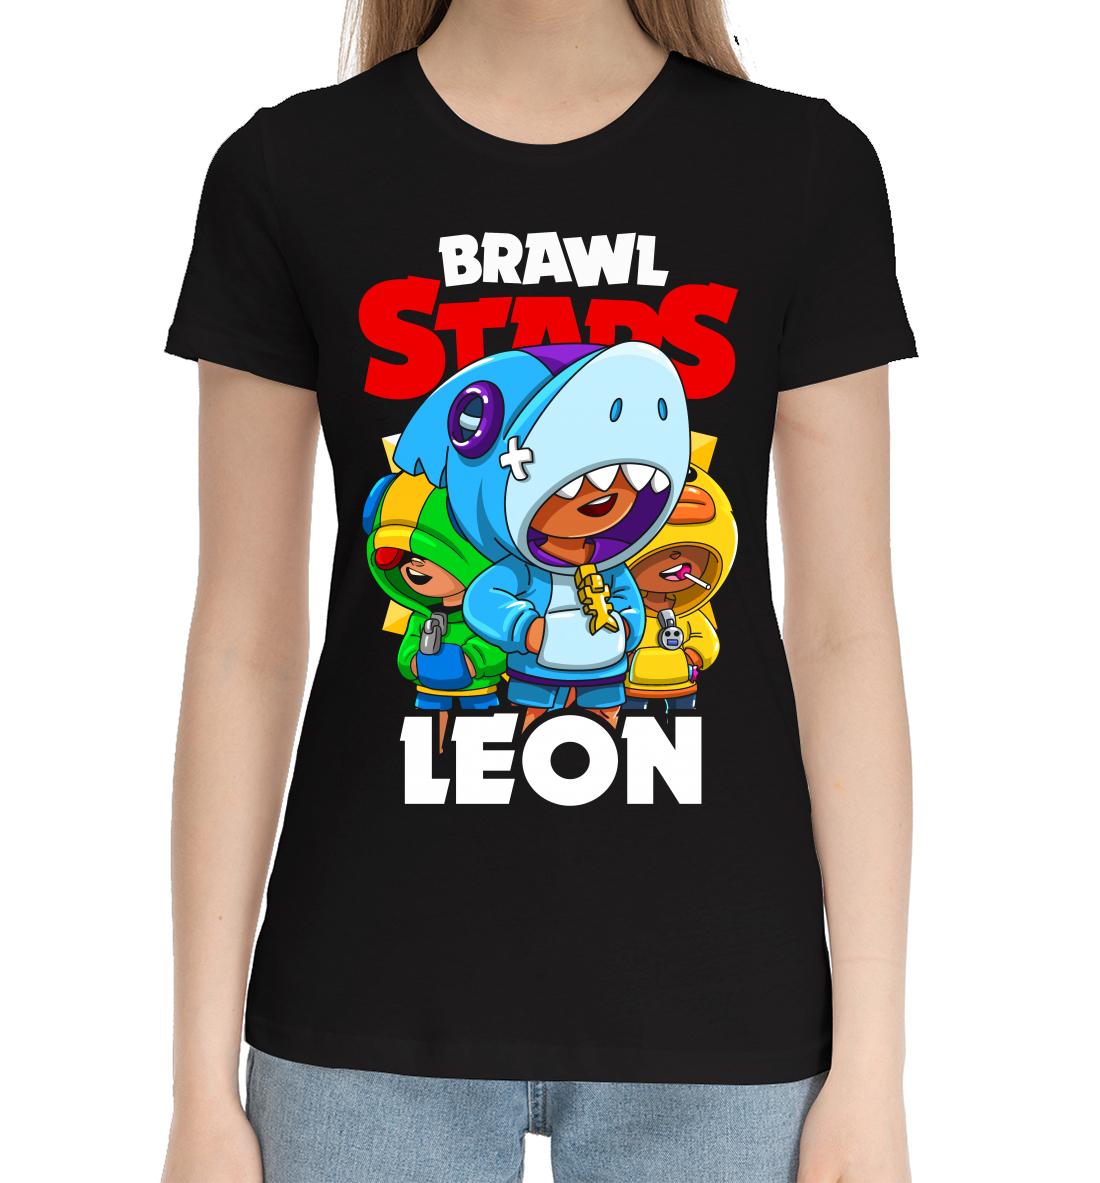 Женская Хлопковая футболка с принтом Brawl Stars, Leon, артикул CLH-298938-hfu-1mp